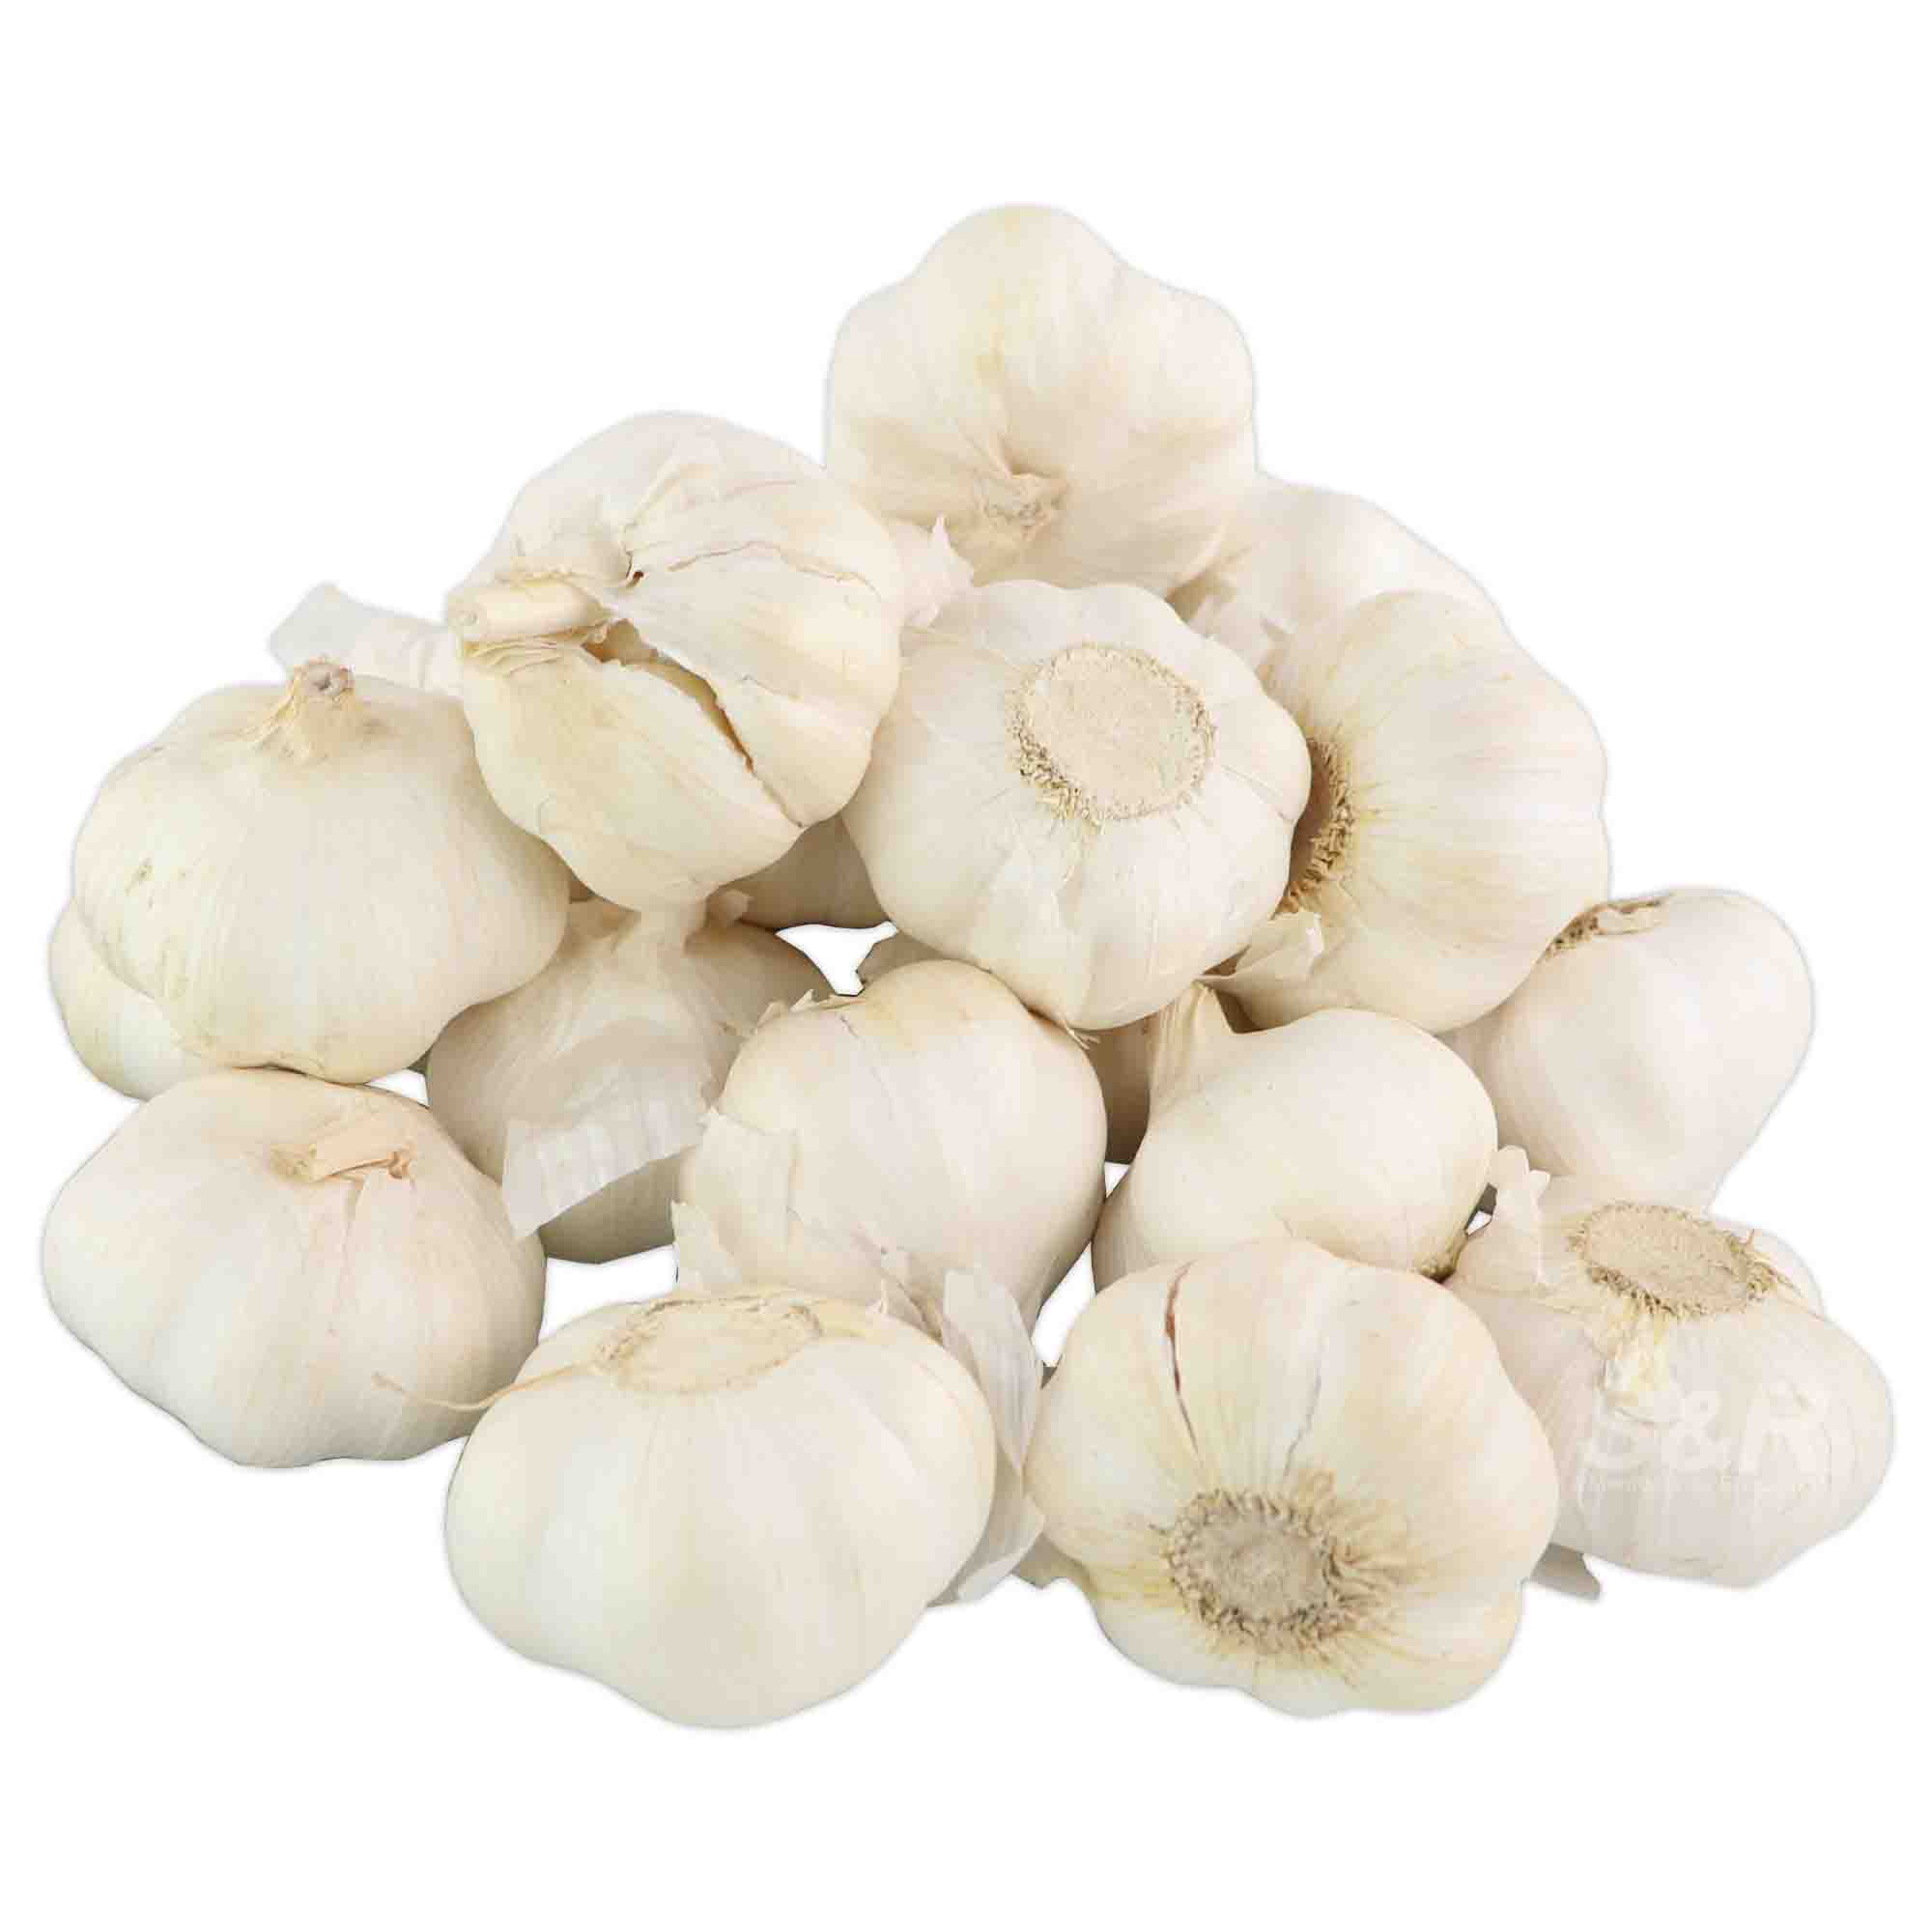 S&R Whole Garlic approx. 1.5kg